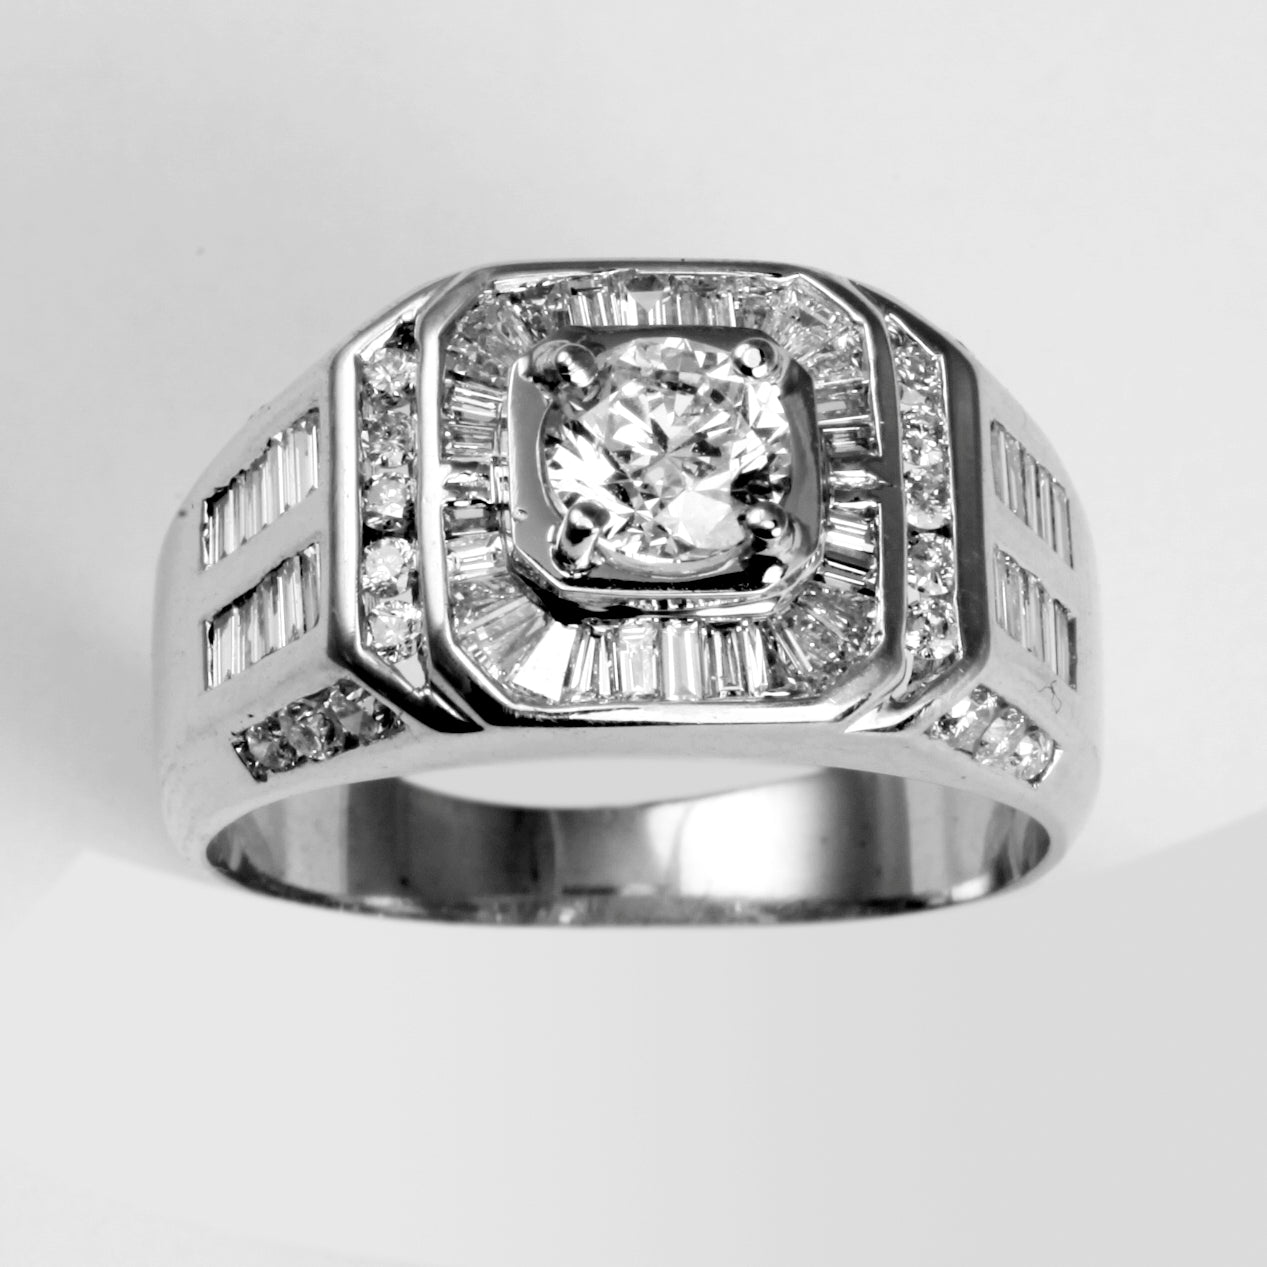 Buy KISNA Real Diamond Jewellery 18KT Yellow Gold SI Diamond Ring for Men |  Cushion S20 at Amazon.in